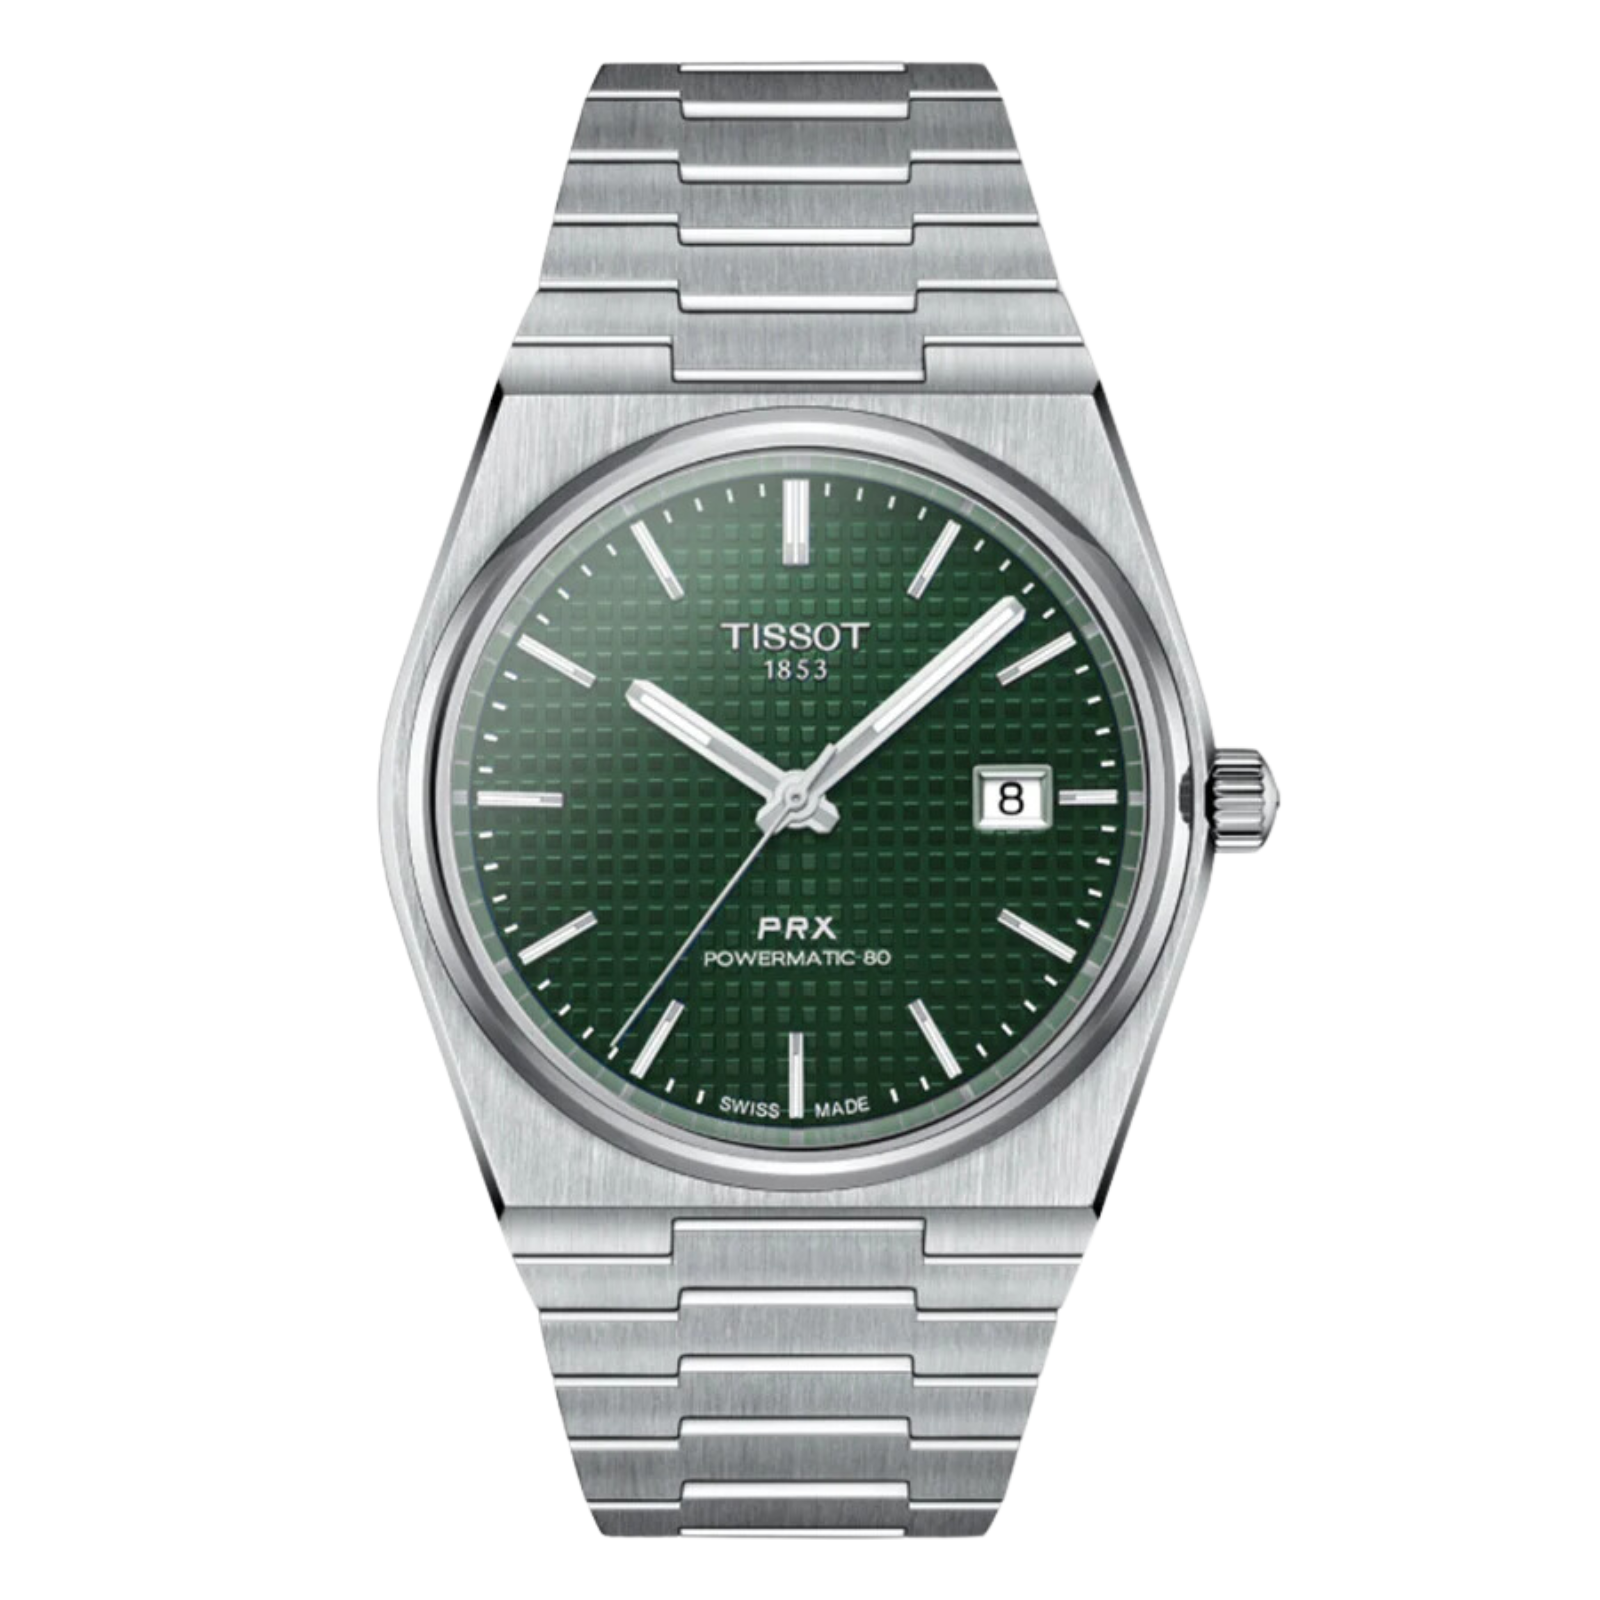 Tissot 1853 PRX Powermatic 80 T1374071109100 T137.407.11.091.00 Green Dial Watch